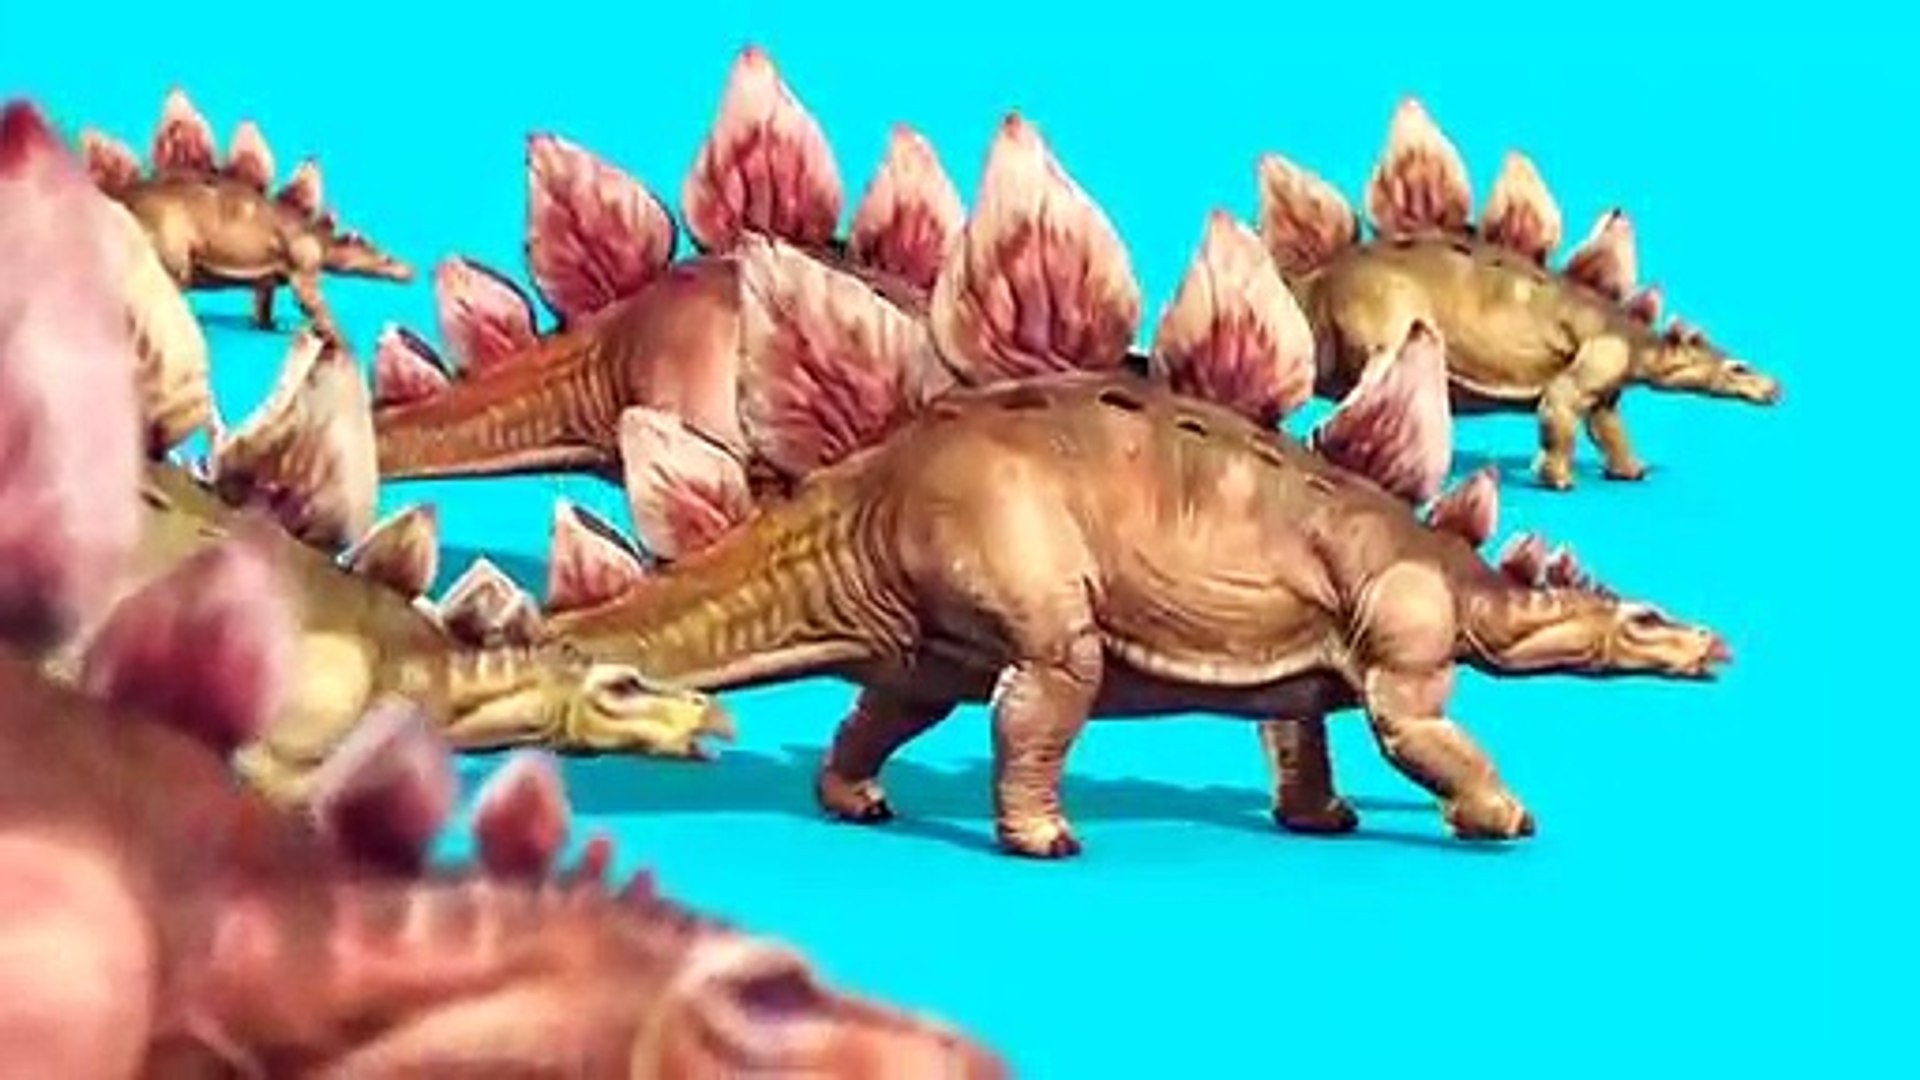 ⁣Anmal Videos / Dinosaurs Videos / Animated Videos